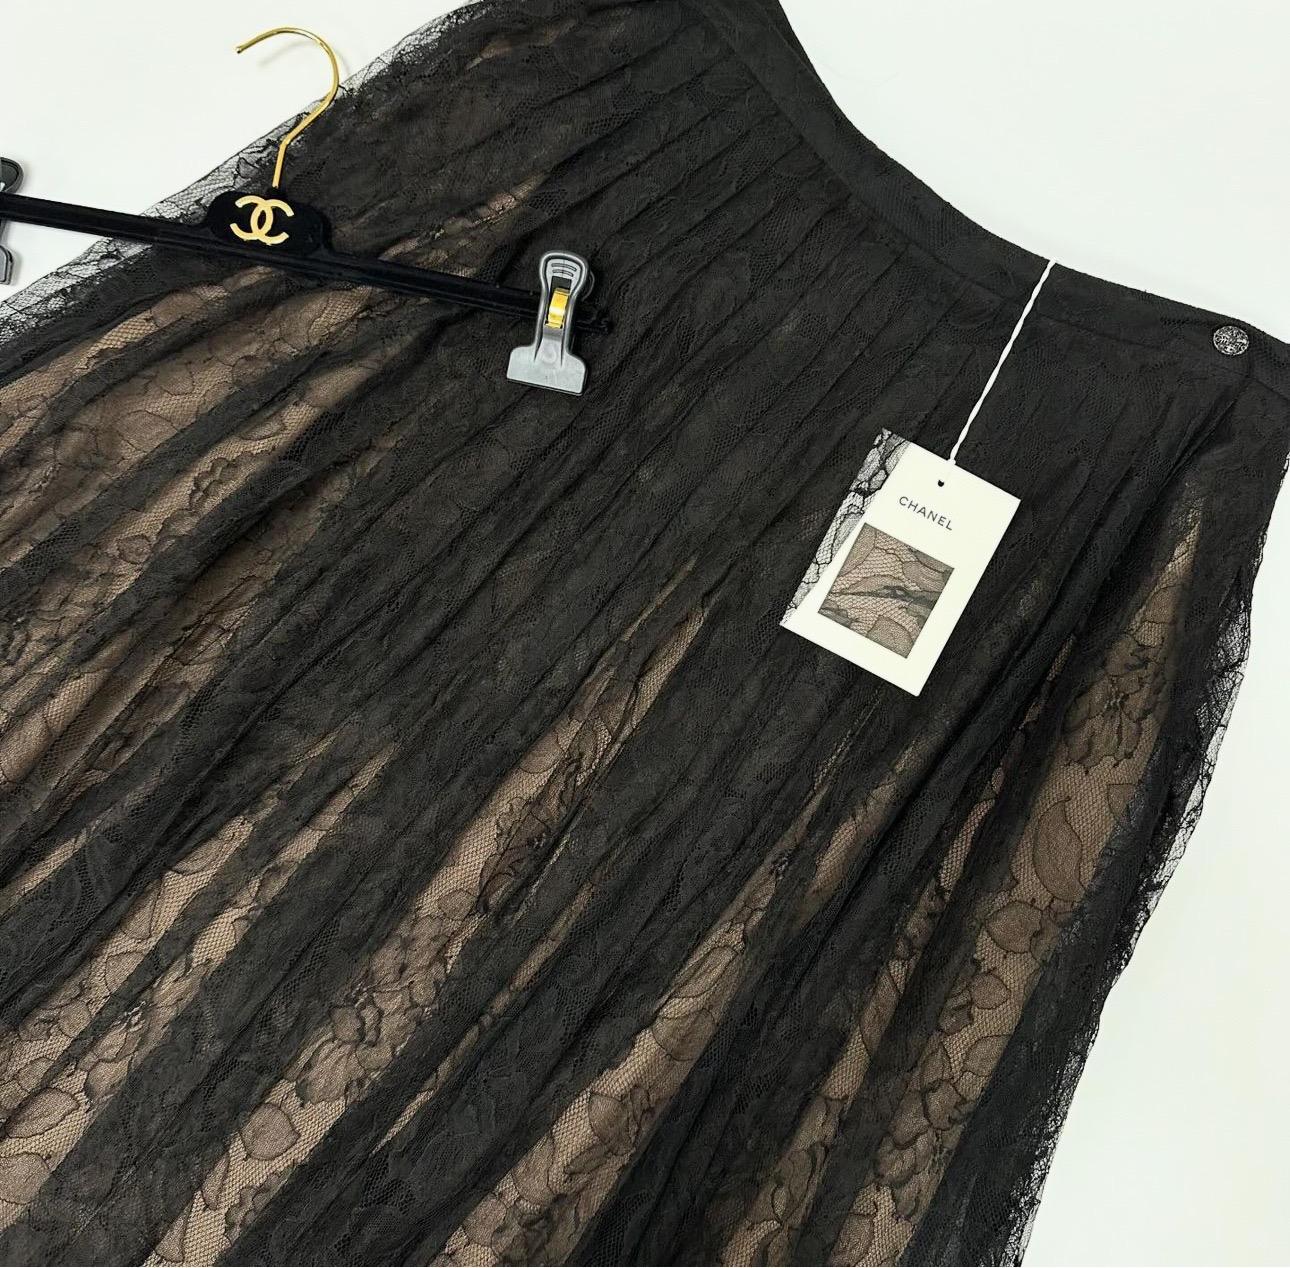 Chanel Black Beige Floral Lace Skirt Size  For Sale 2